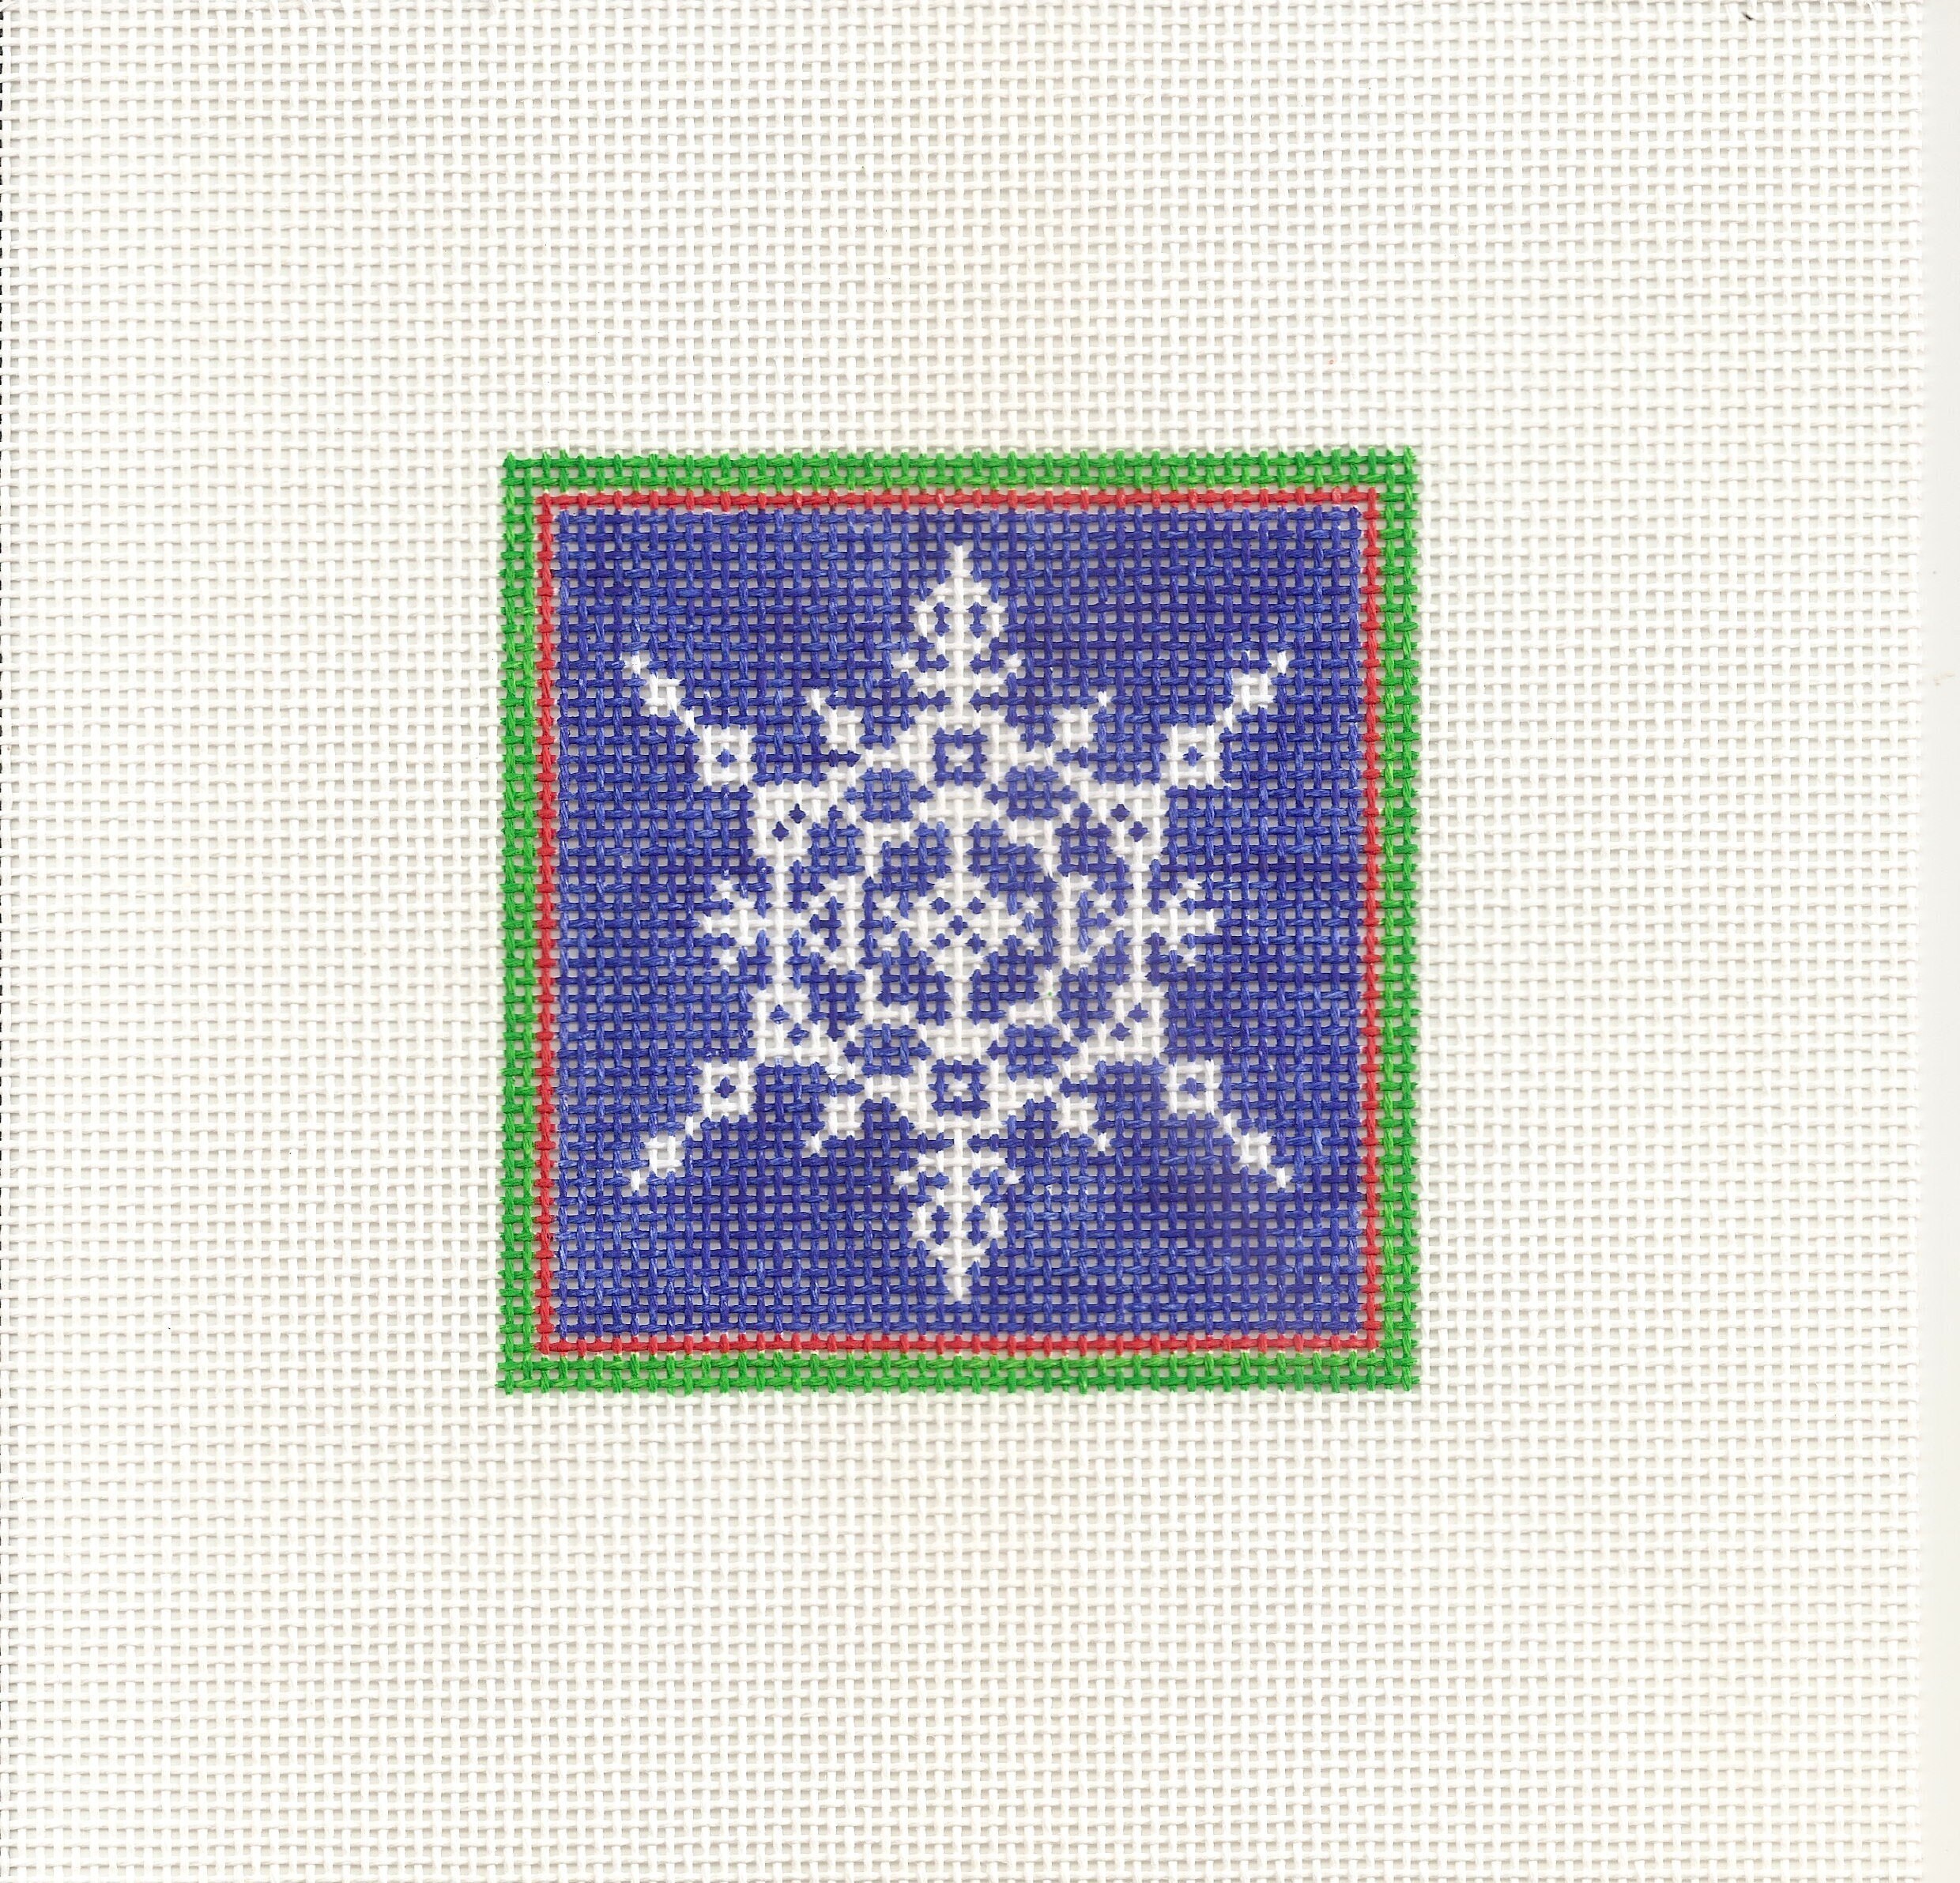 Snowflake Beads for Needlepoint – Evergreen Needlepoint